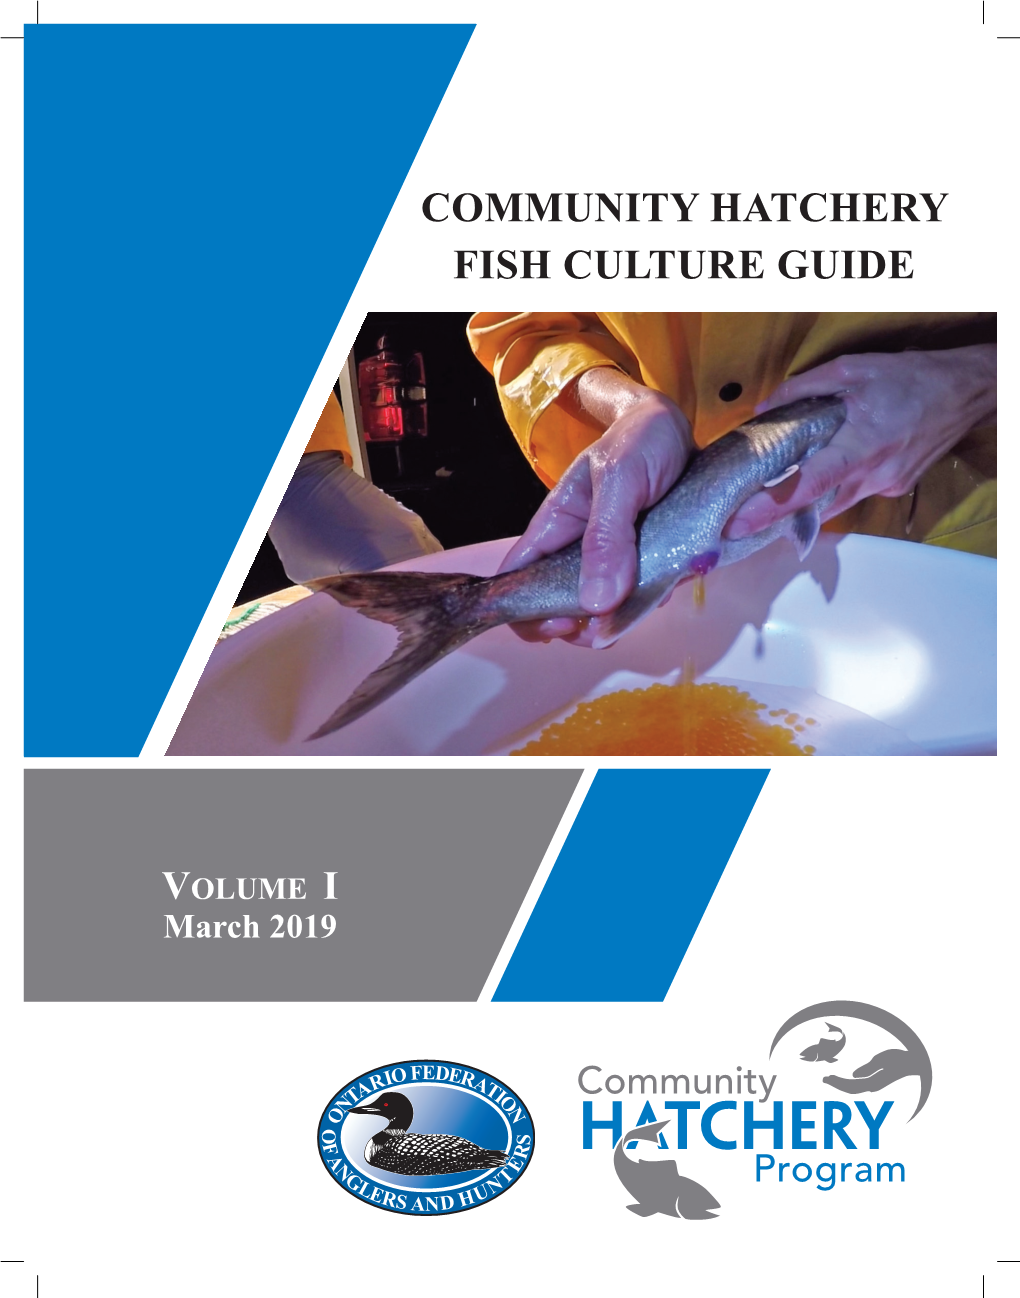 Community Hatchery Fish Culture Guide